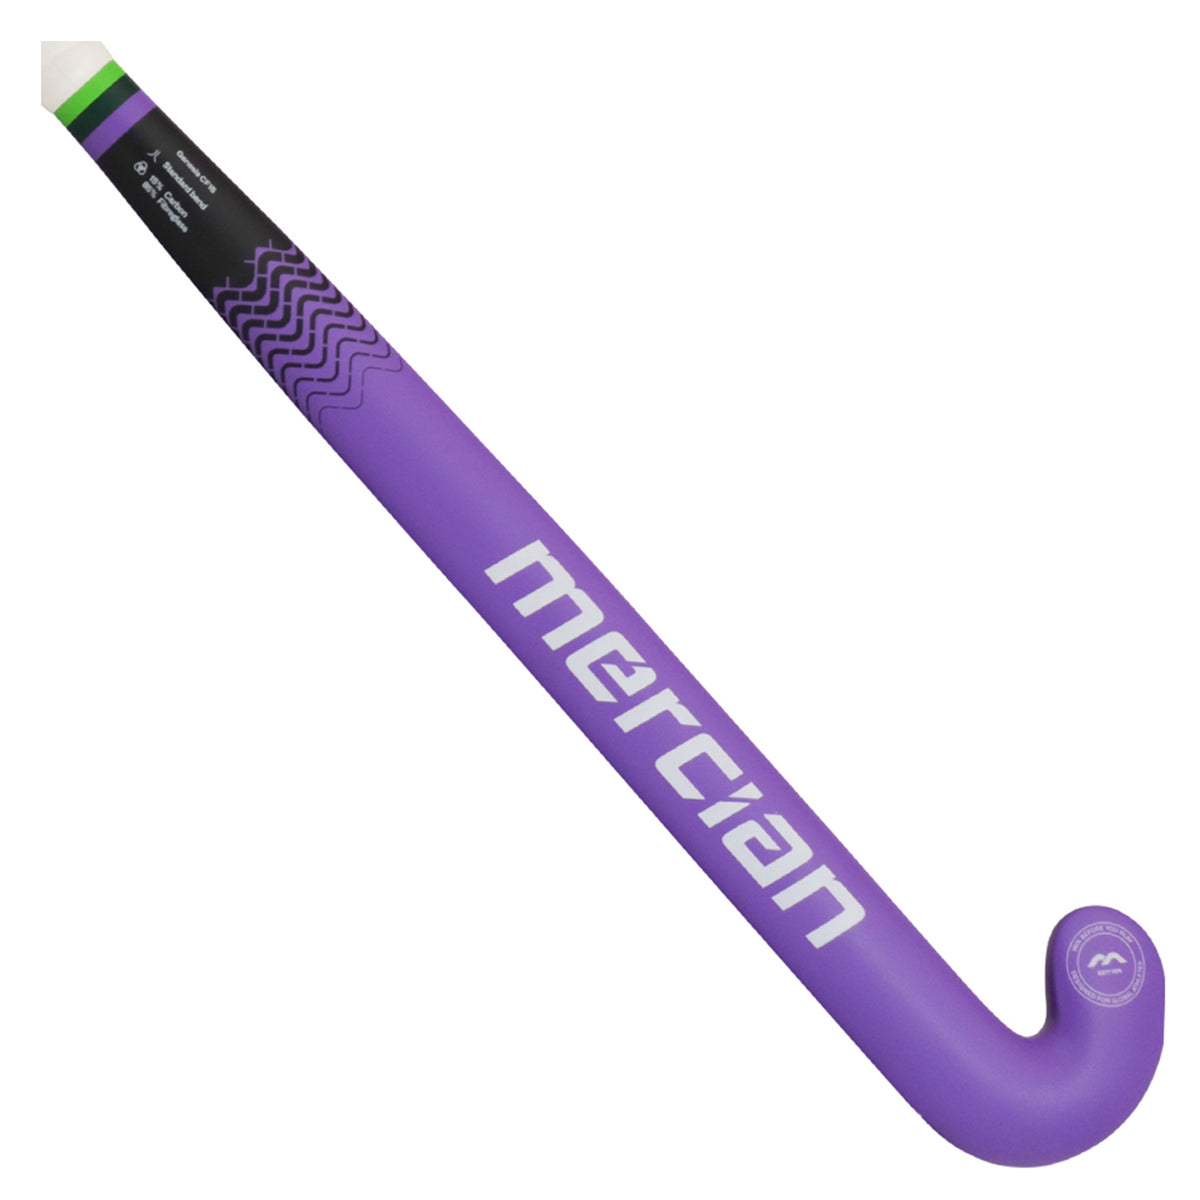 Mercian Genesis CF15 Pro Hockey Stick: Black/Purple